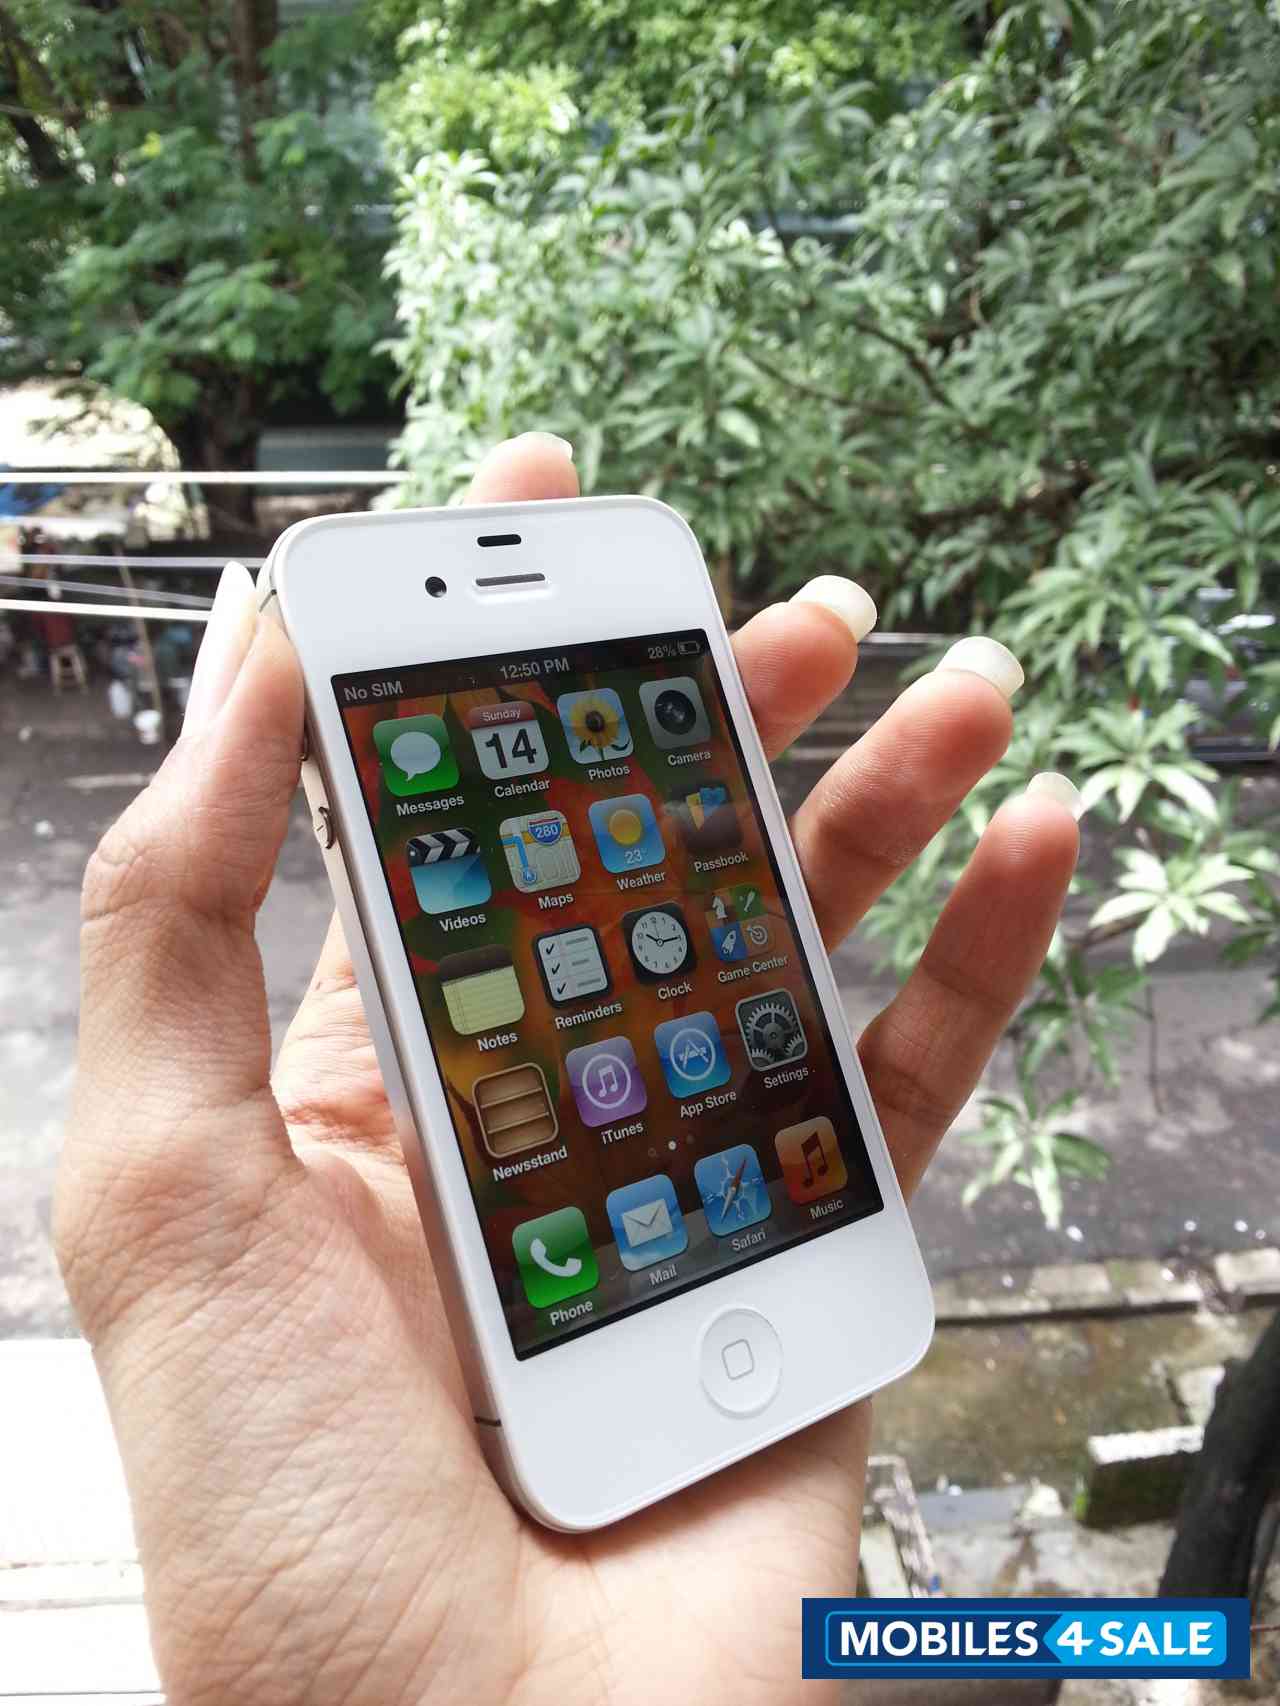 White Apple iPhone 4S